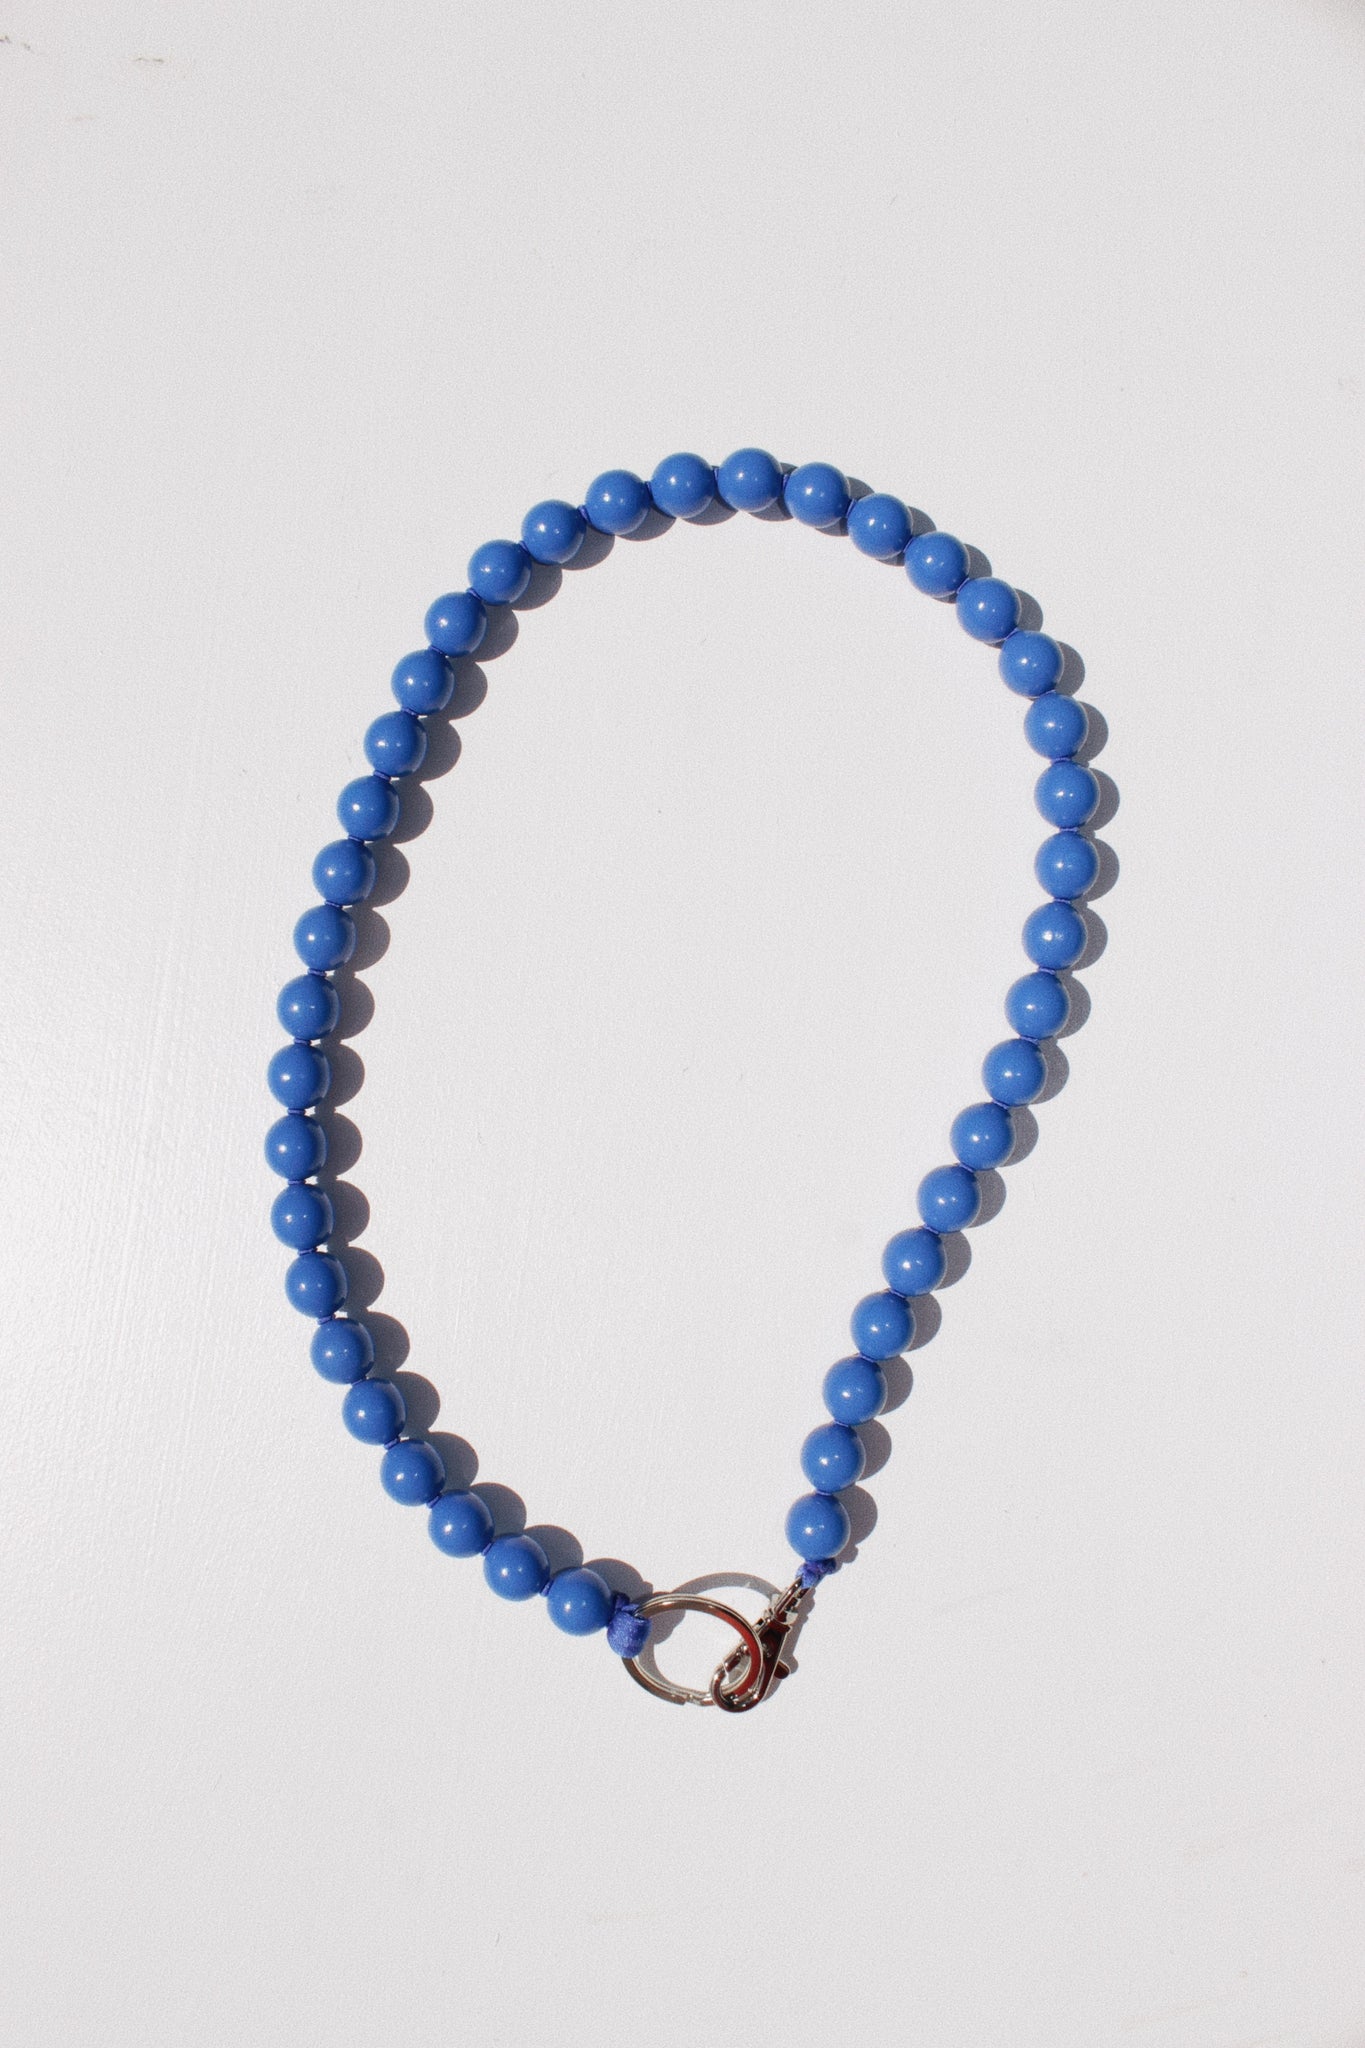 Perlen Long Keyholder Blue-Blue